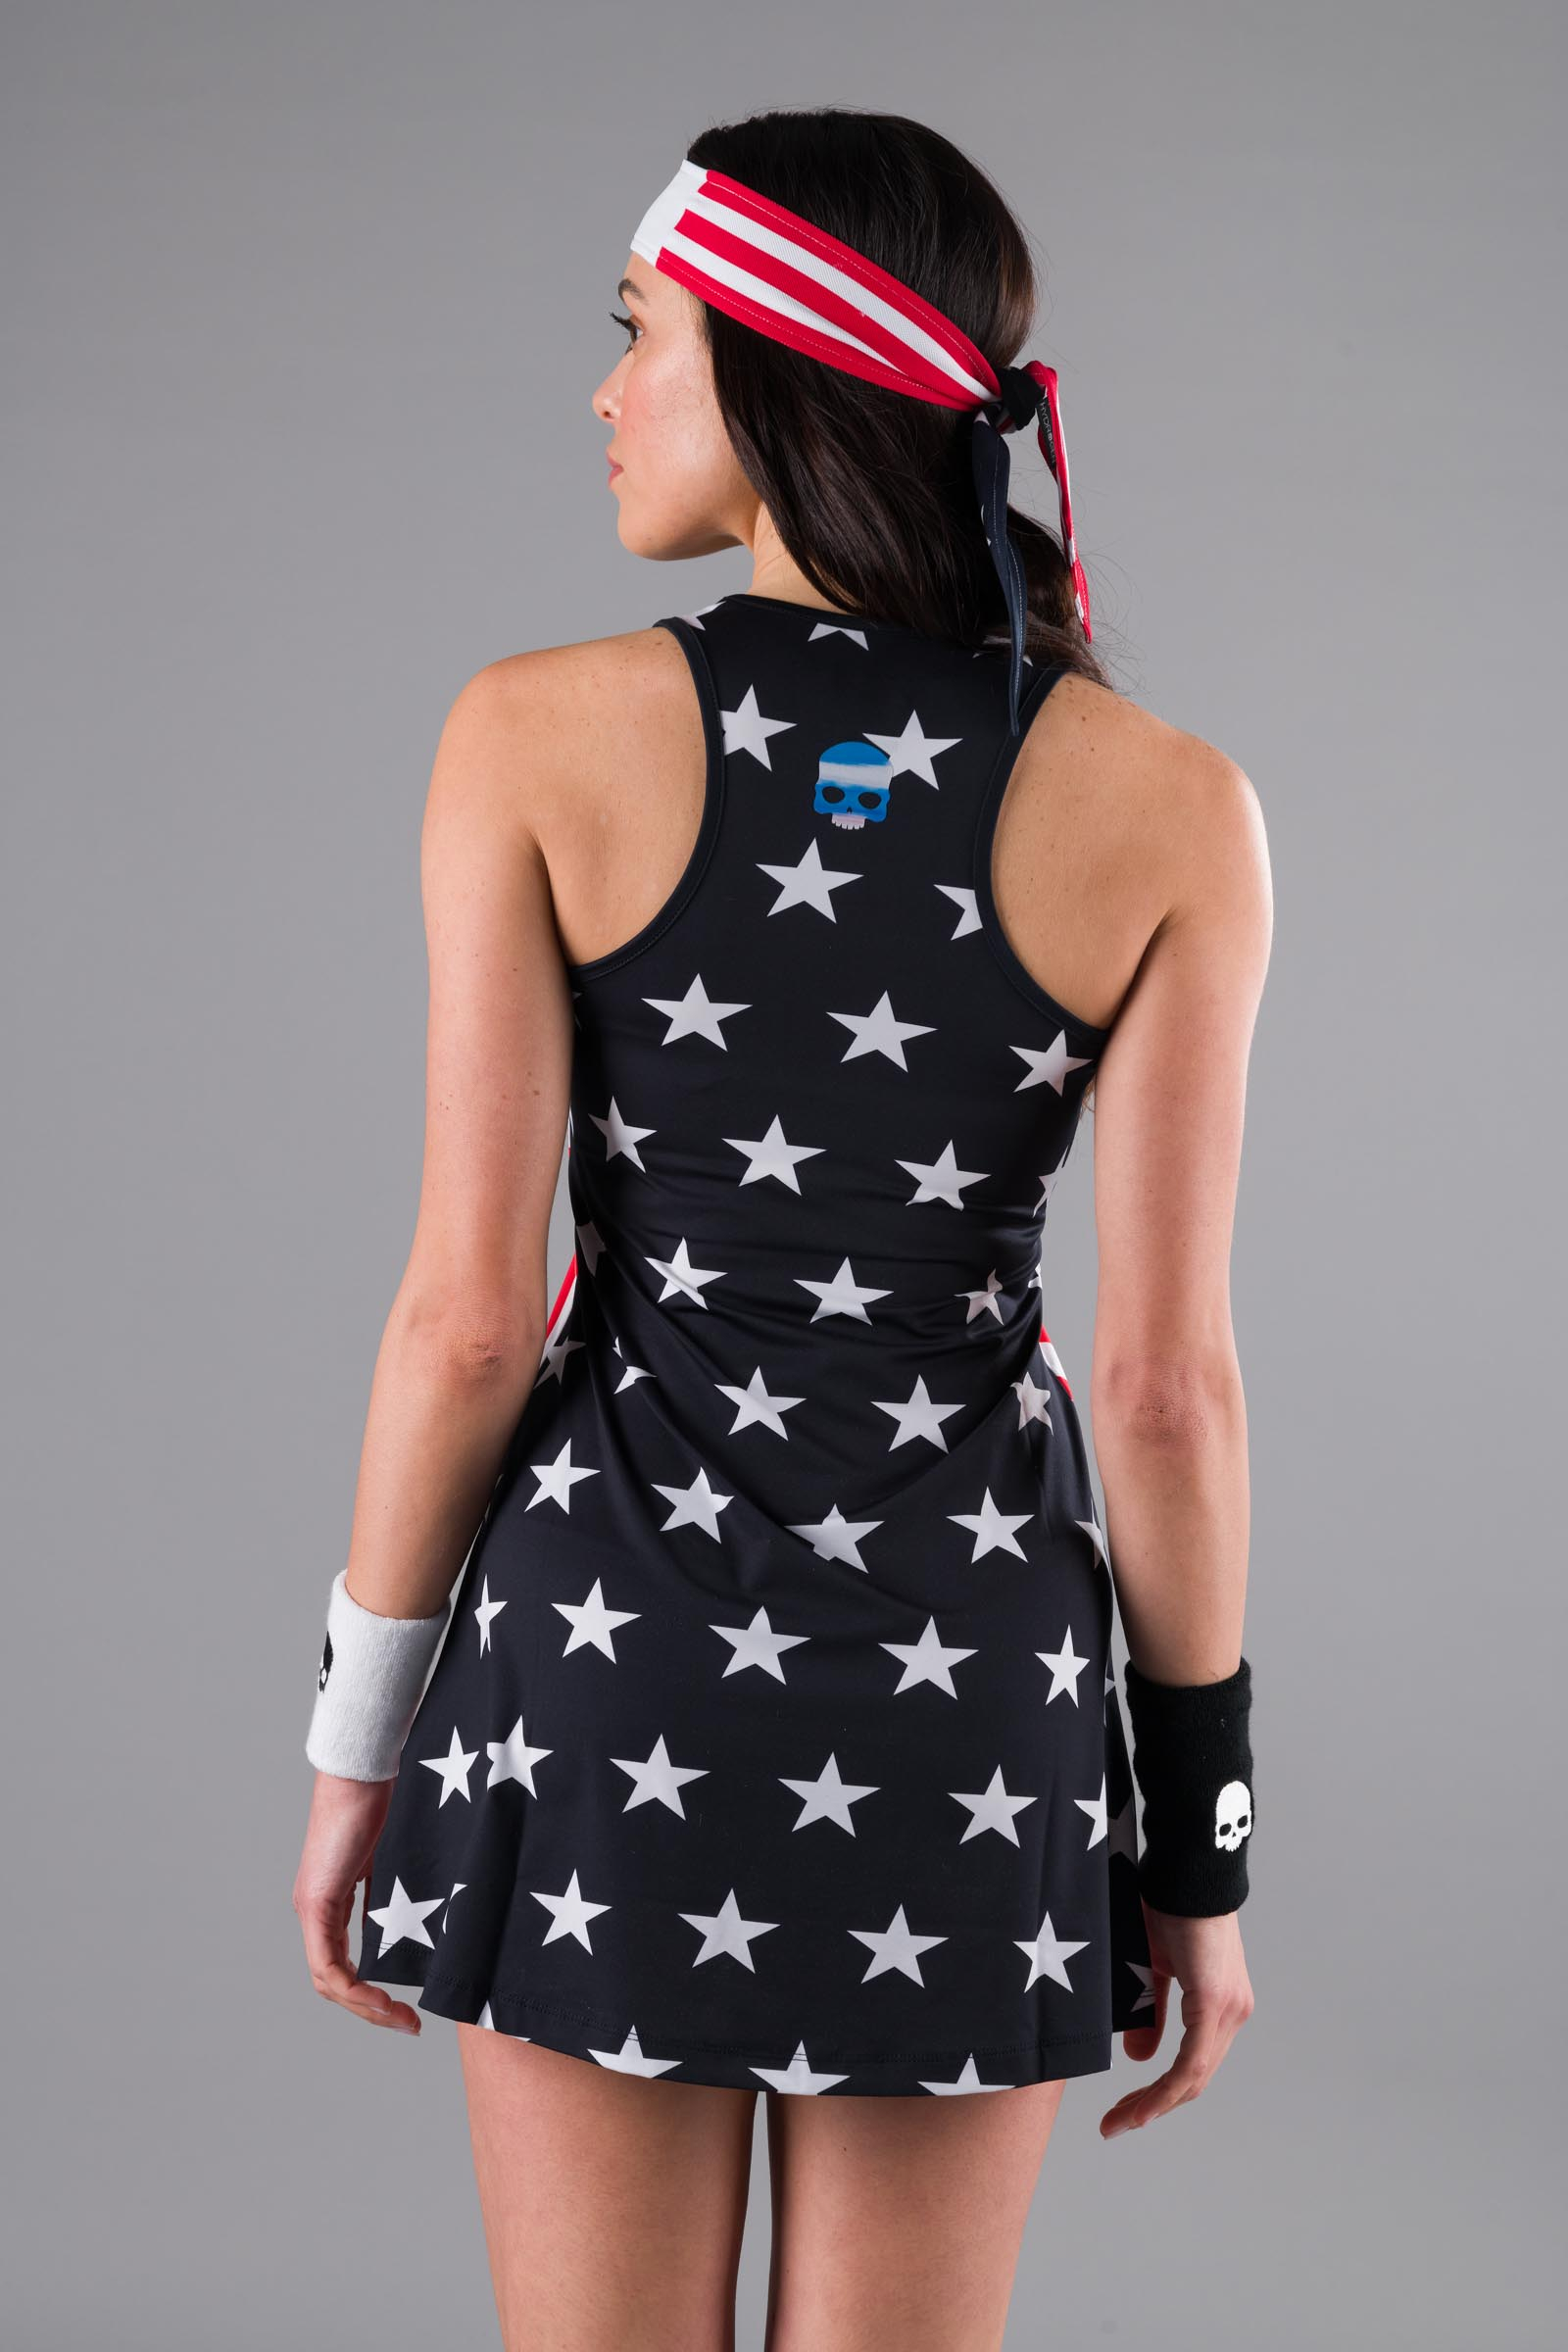 STARS TECH DRESS - BLUE NAVY/RED - Abbigliamento sportivo | Hydrogen